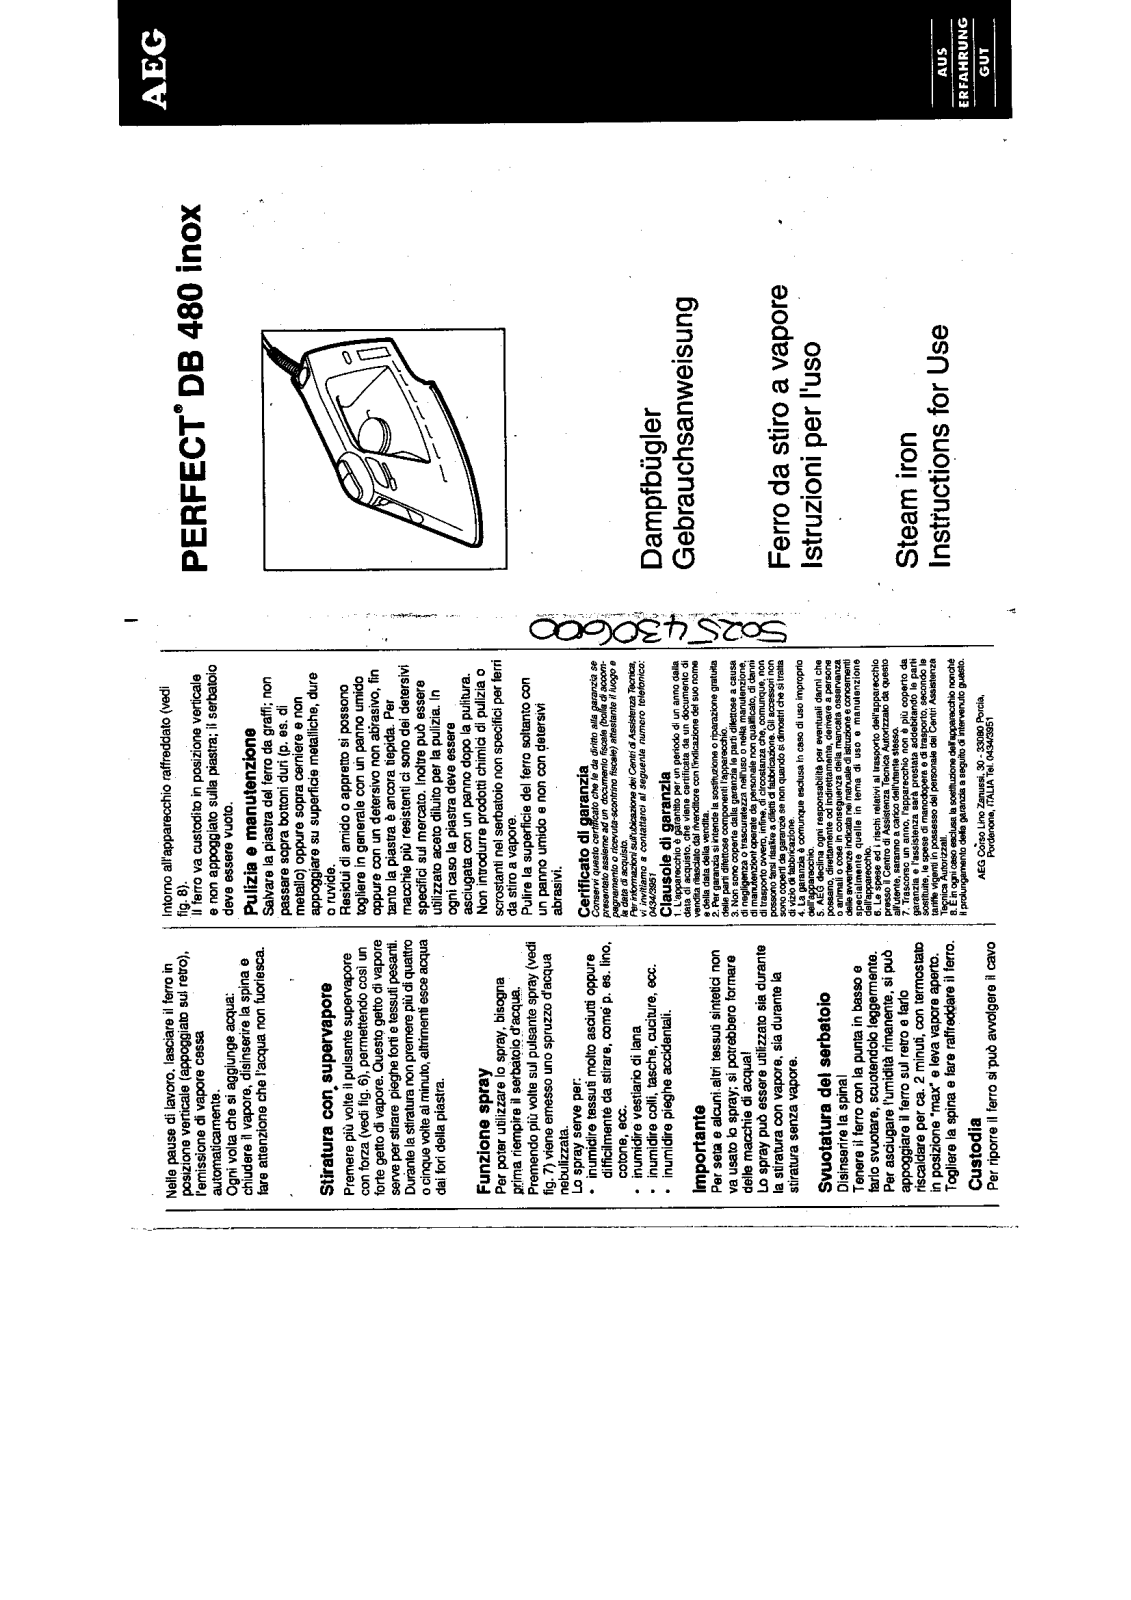 AEG DB480INOX User Manual